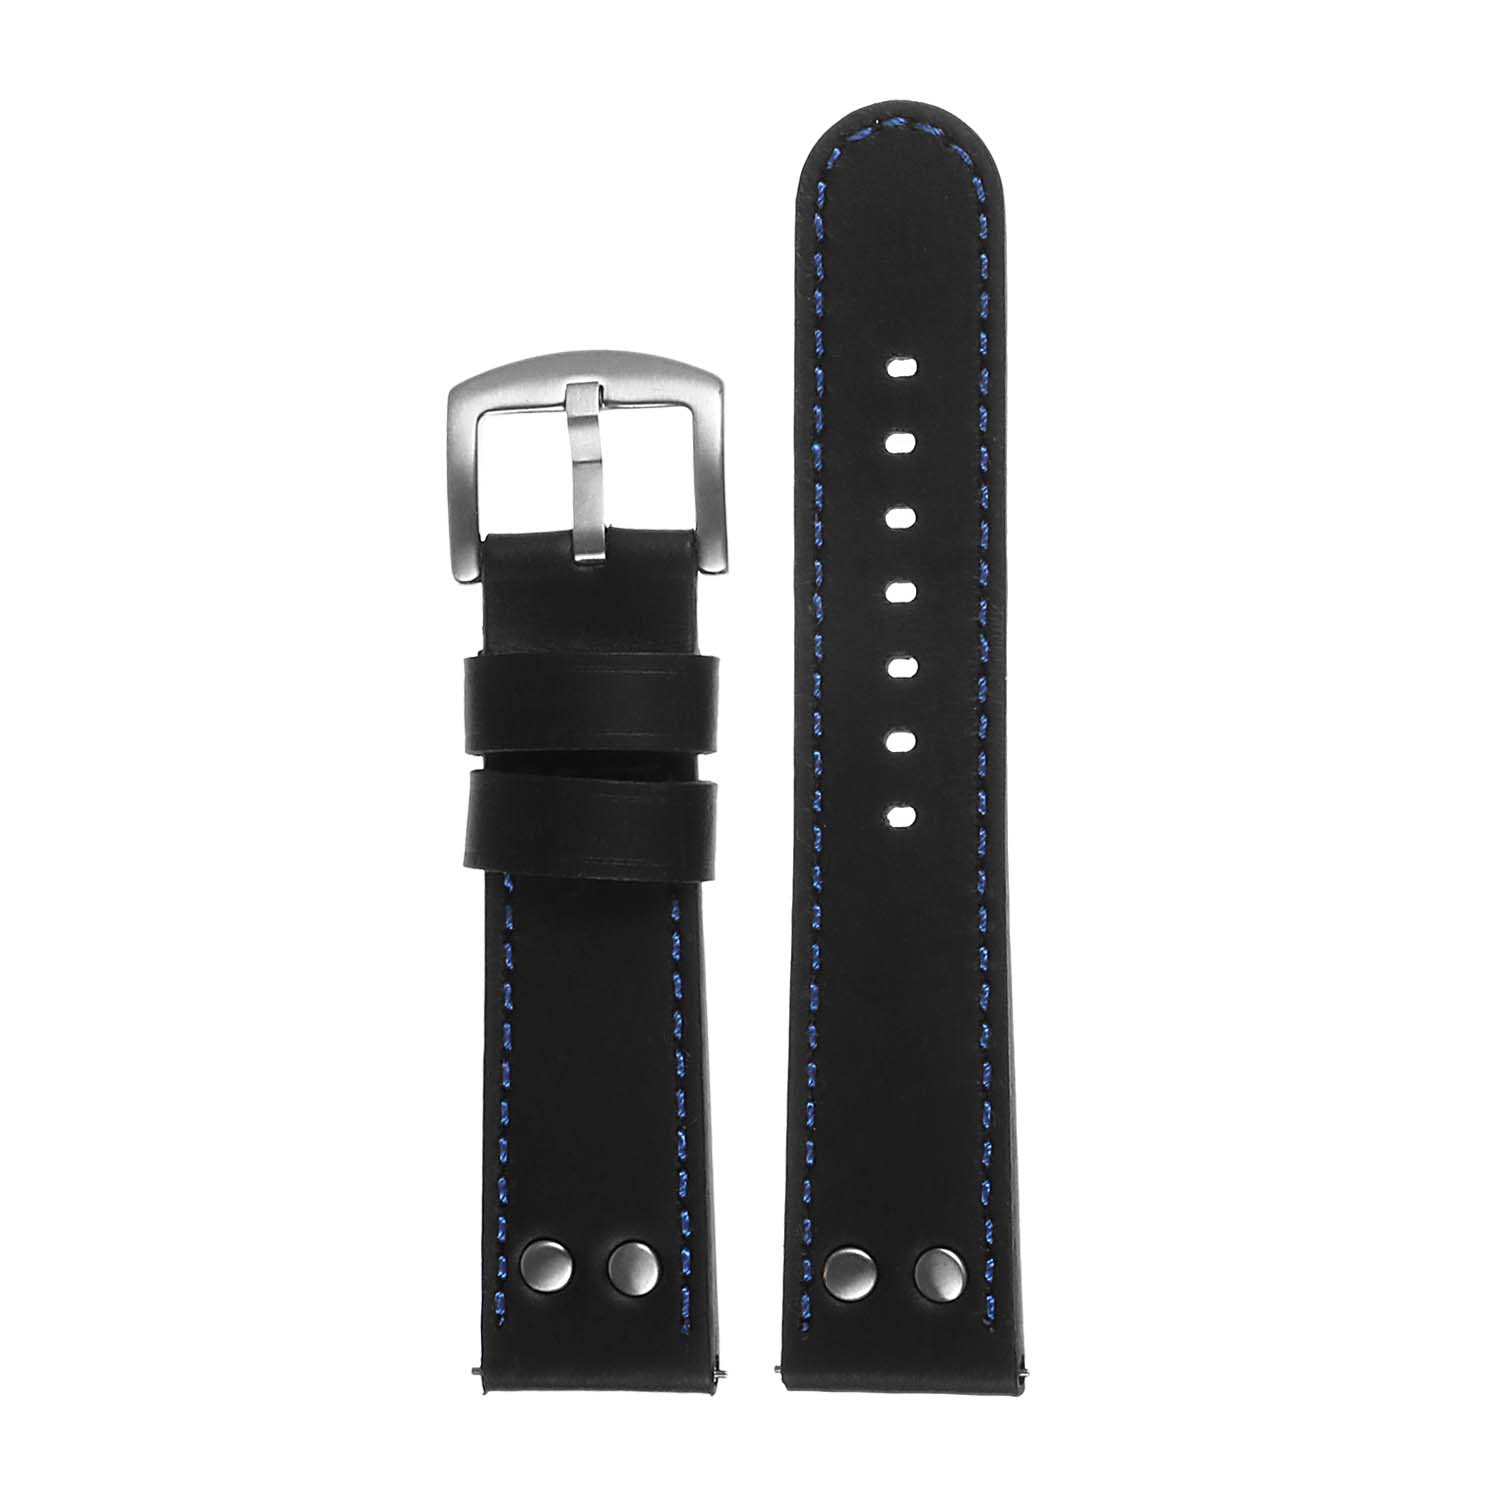 DASSARI Leather Pilot 22mm Watch Band Strap for LG G Watch W100 - Black & Blue